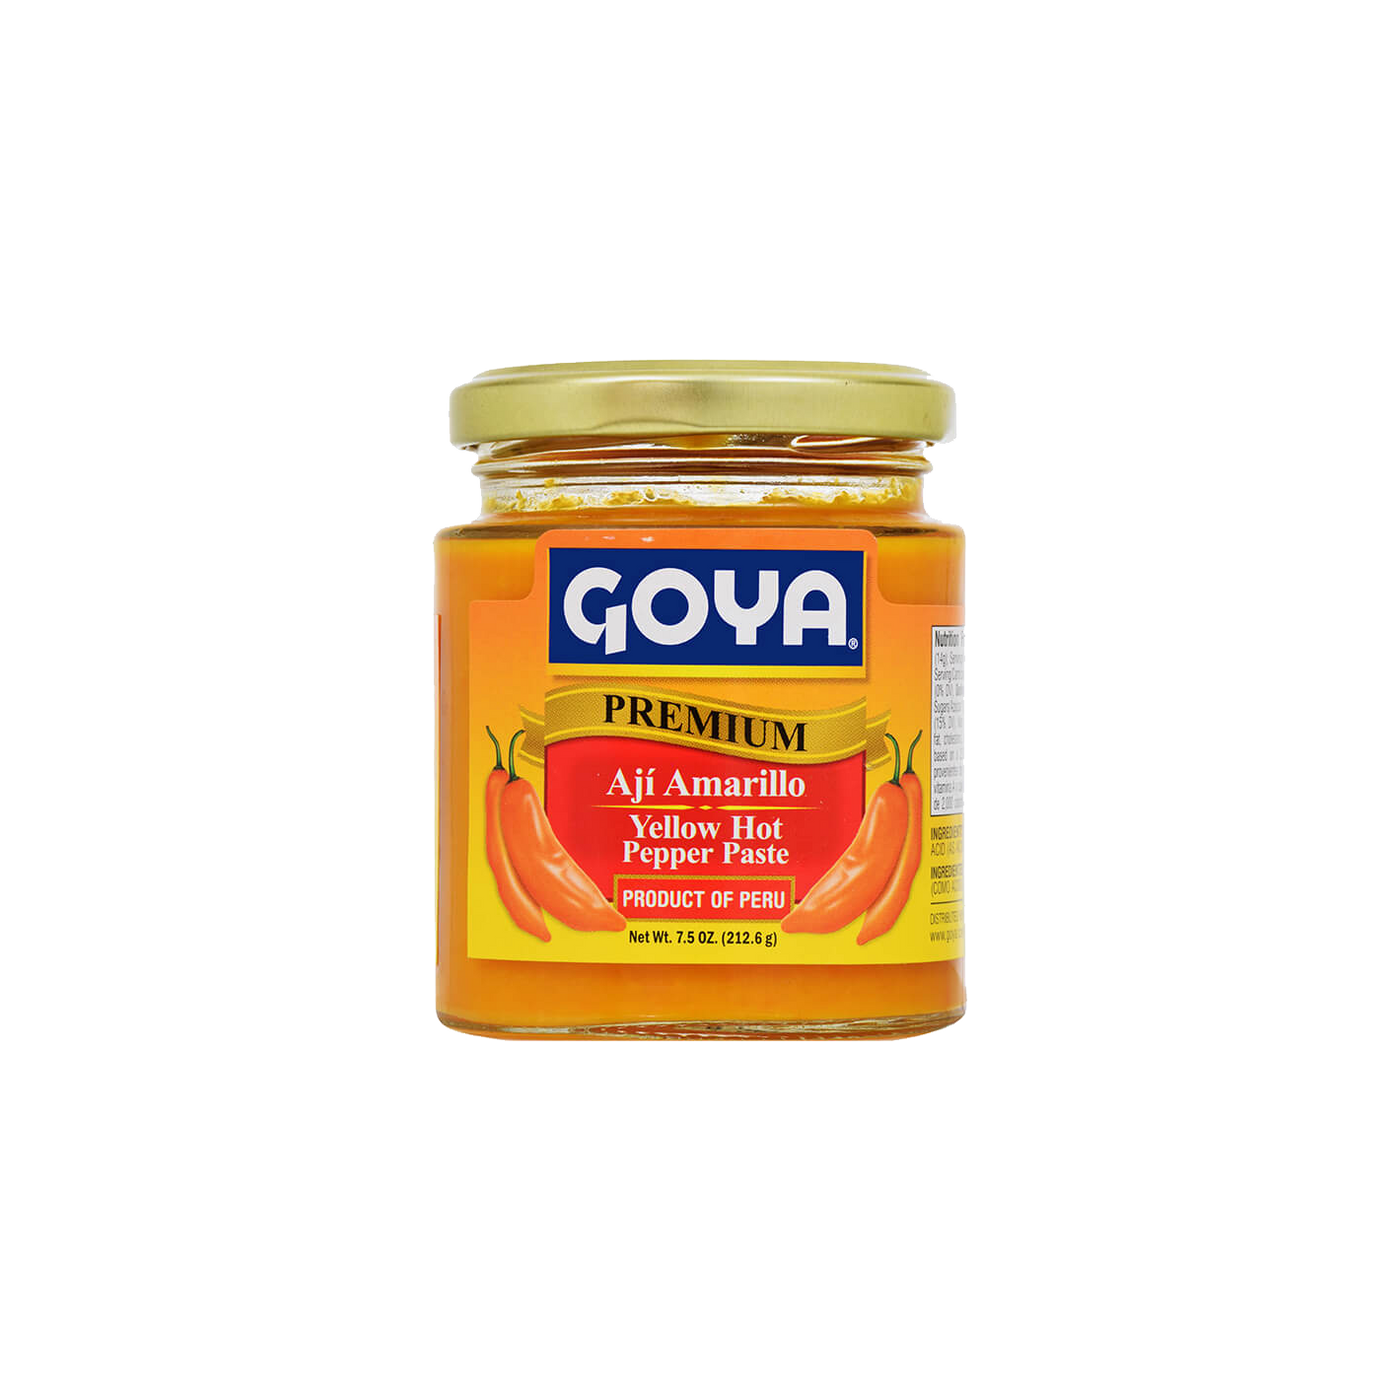   Goya Aji Amarillo Yellow Hot Pepper Paste